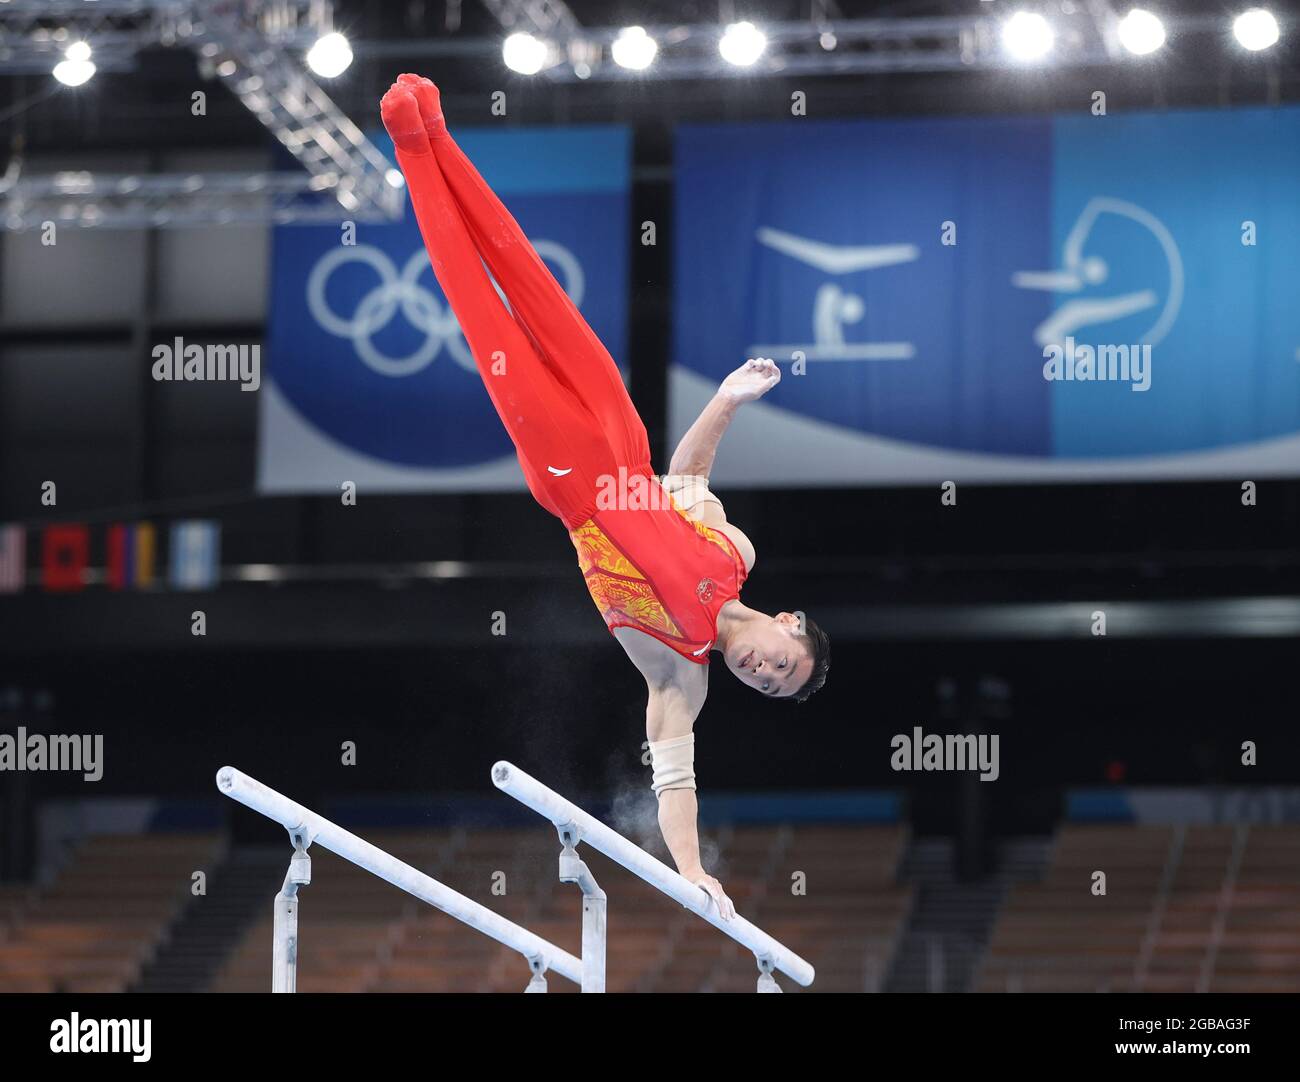 (210803) -- TOKIO, 3. August 2021 (Xinhua) -- Zou Jingyuan aus China tritt während des Finales der Männer im Kunstturnen bei den Olympischen Spielen 2020 in Tokio, Japan, am 3. August 2021 an. (Xinhua/Zheng Huansong) Stockfoto